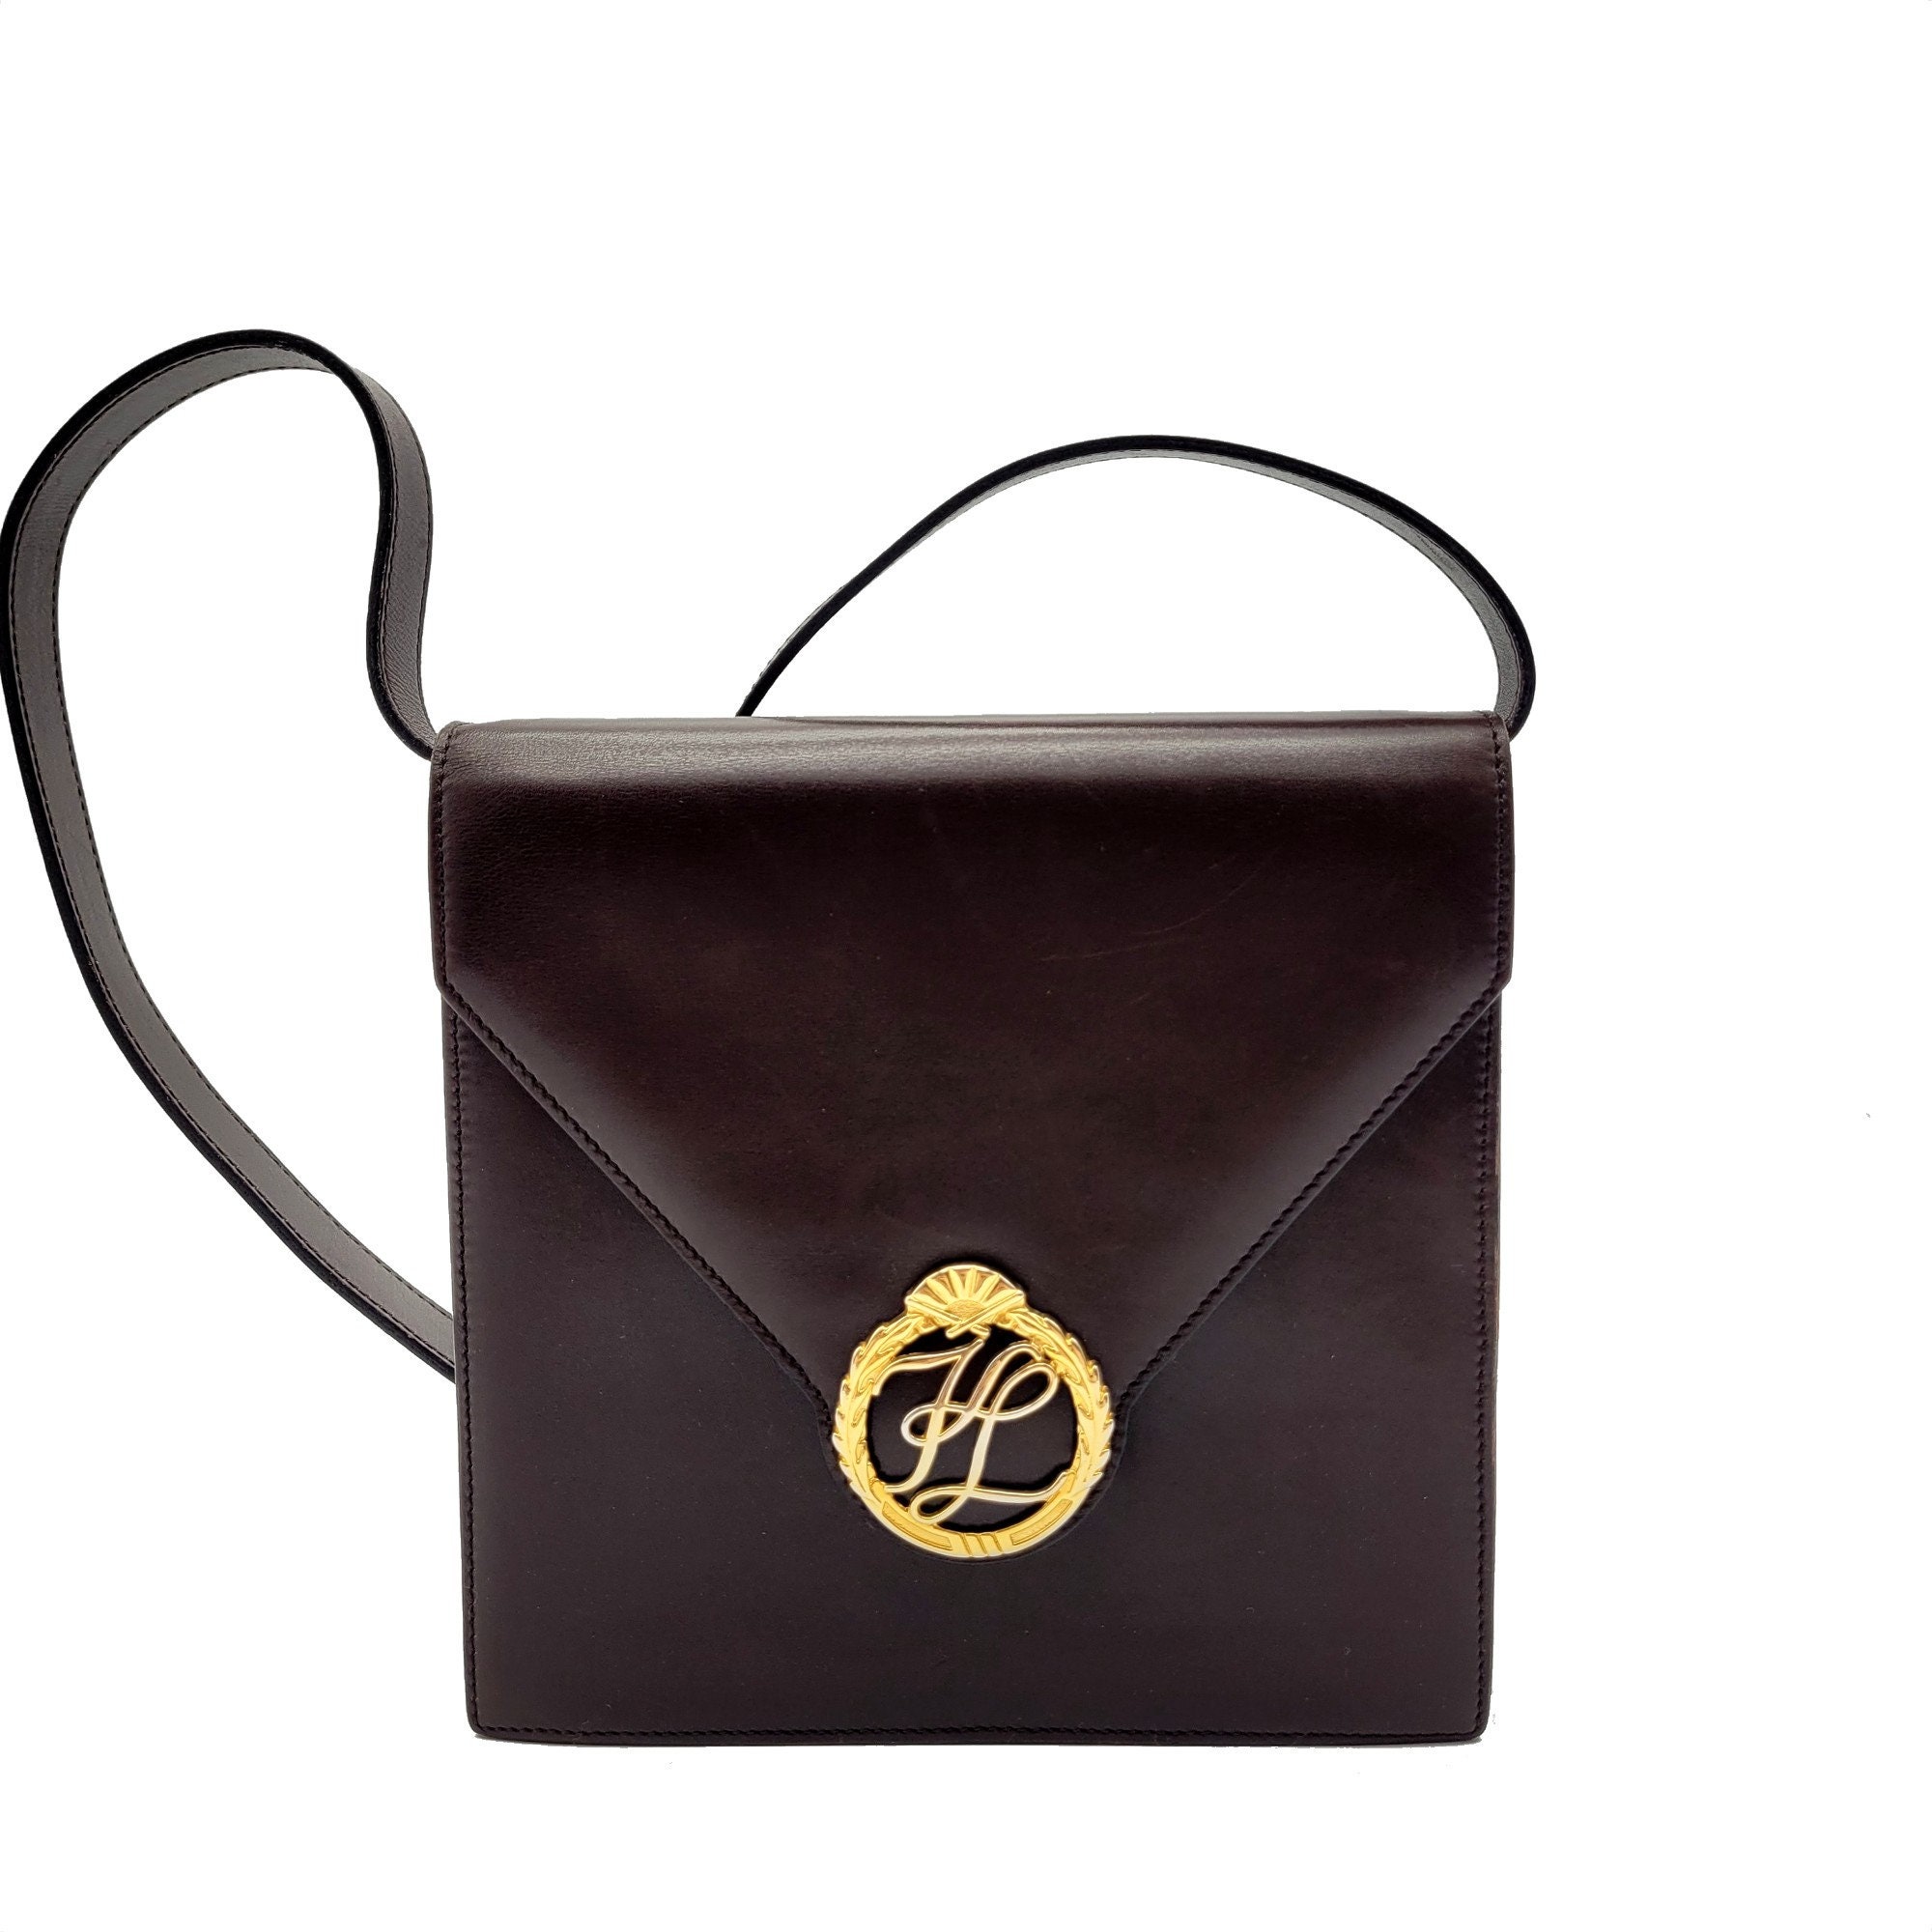 Karl Lagerfeld Paris Logo BLACK Tote BAG Handbag with CHARM NEW AUTHENTIC